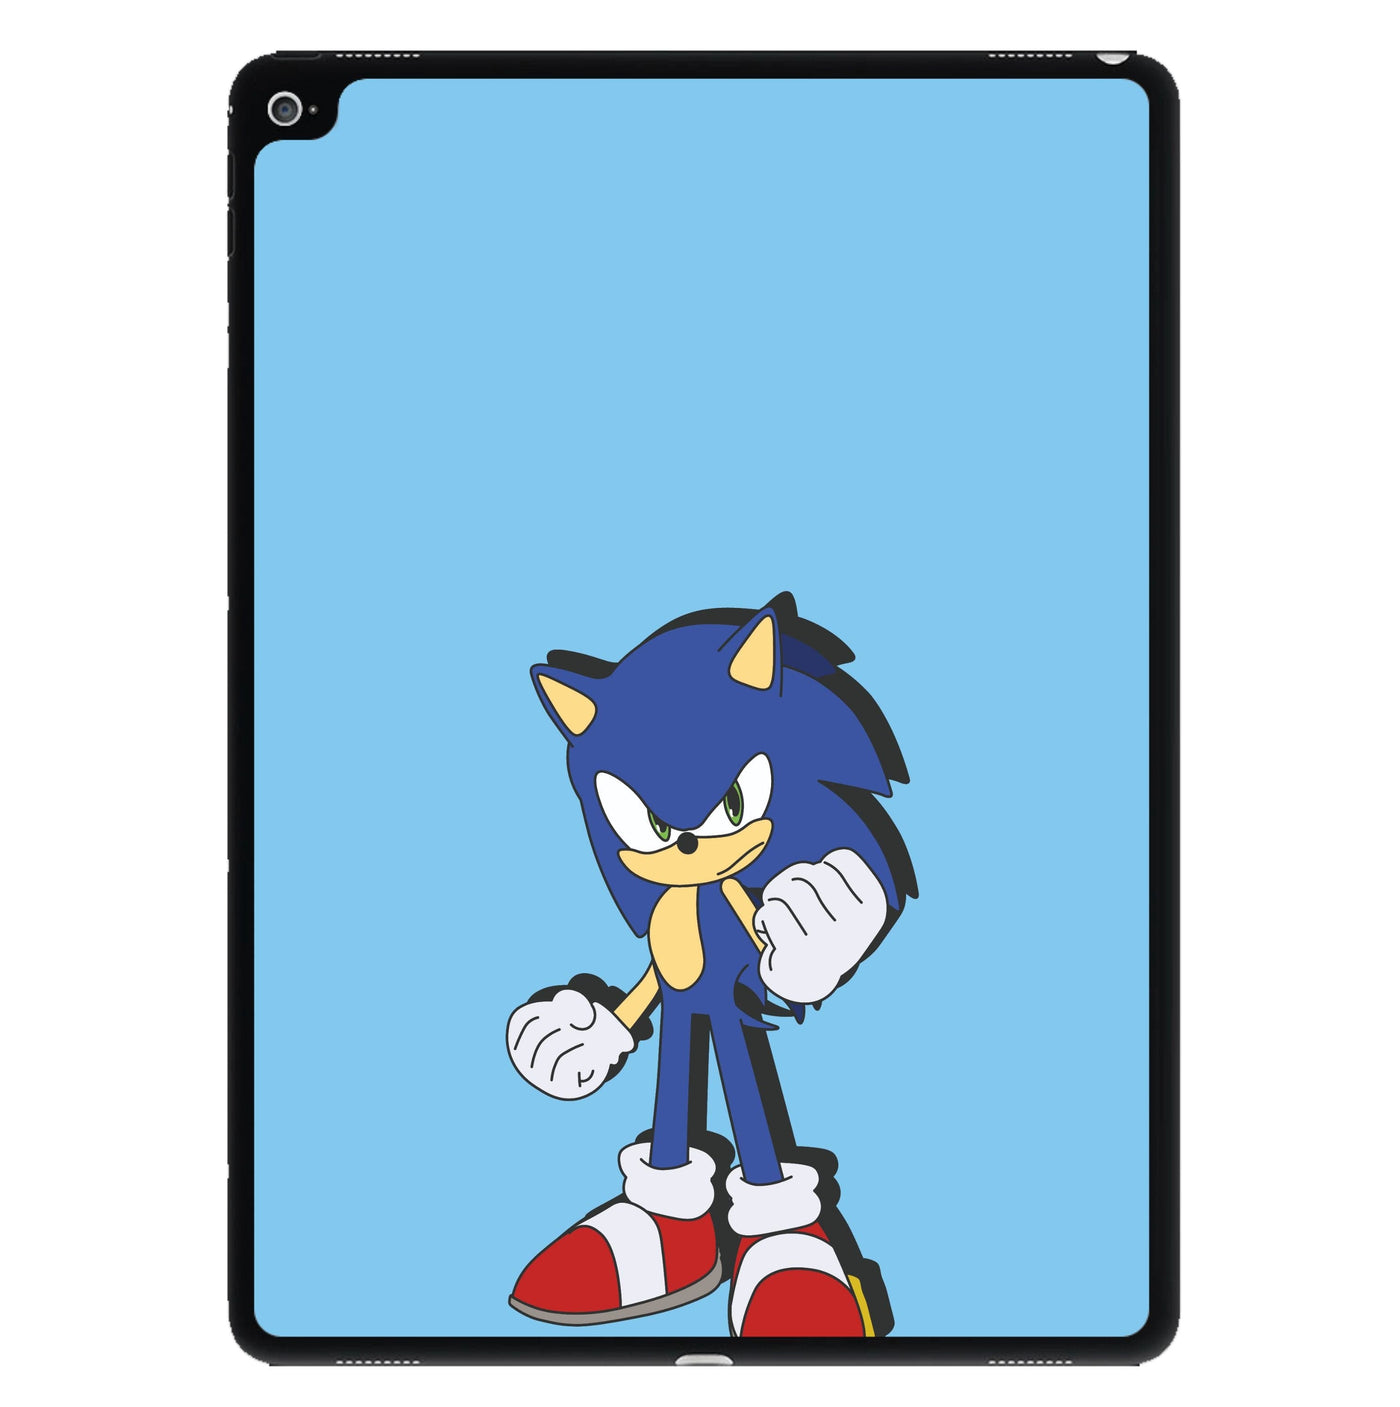 Sonic The Hedgehog iPad Case